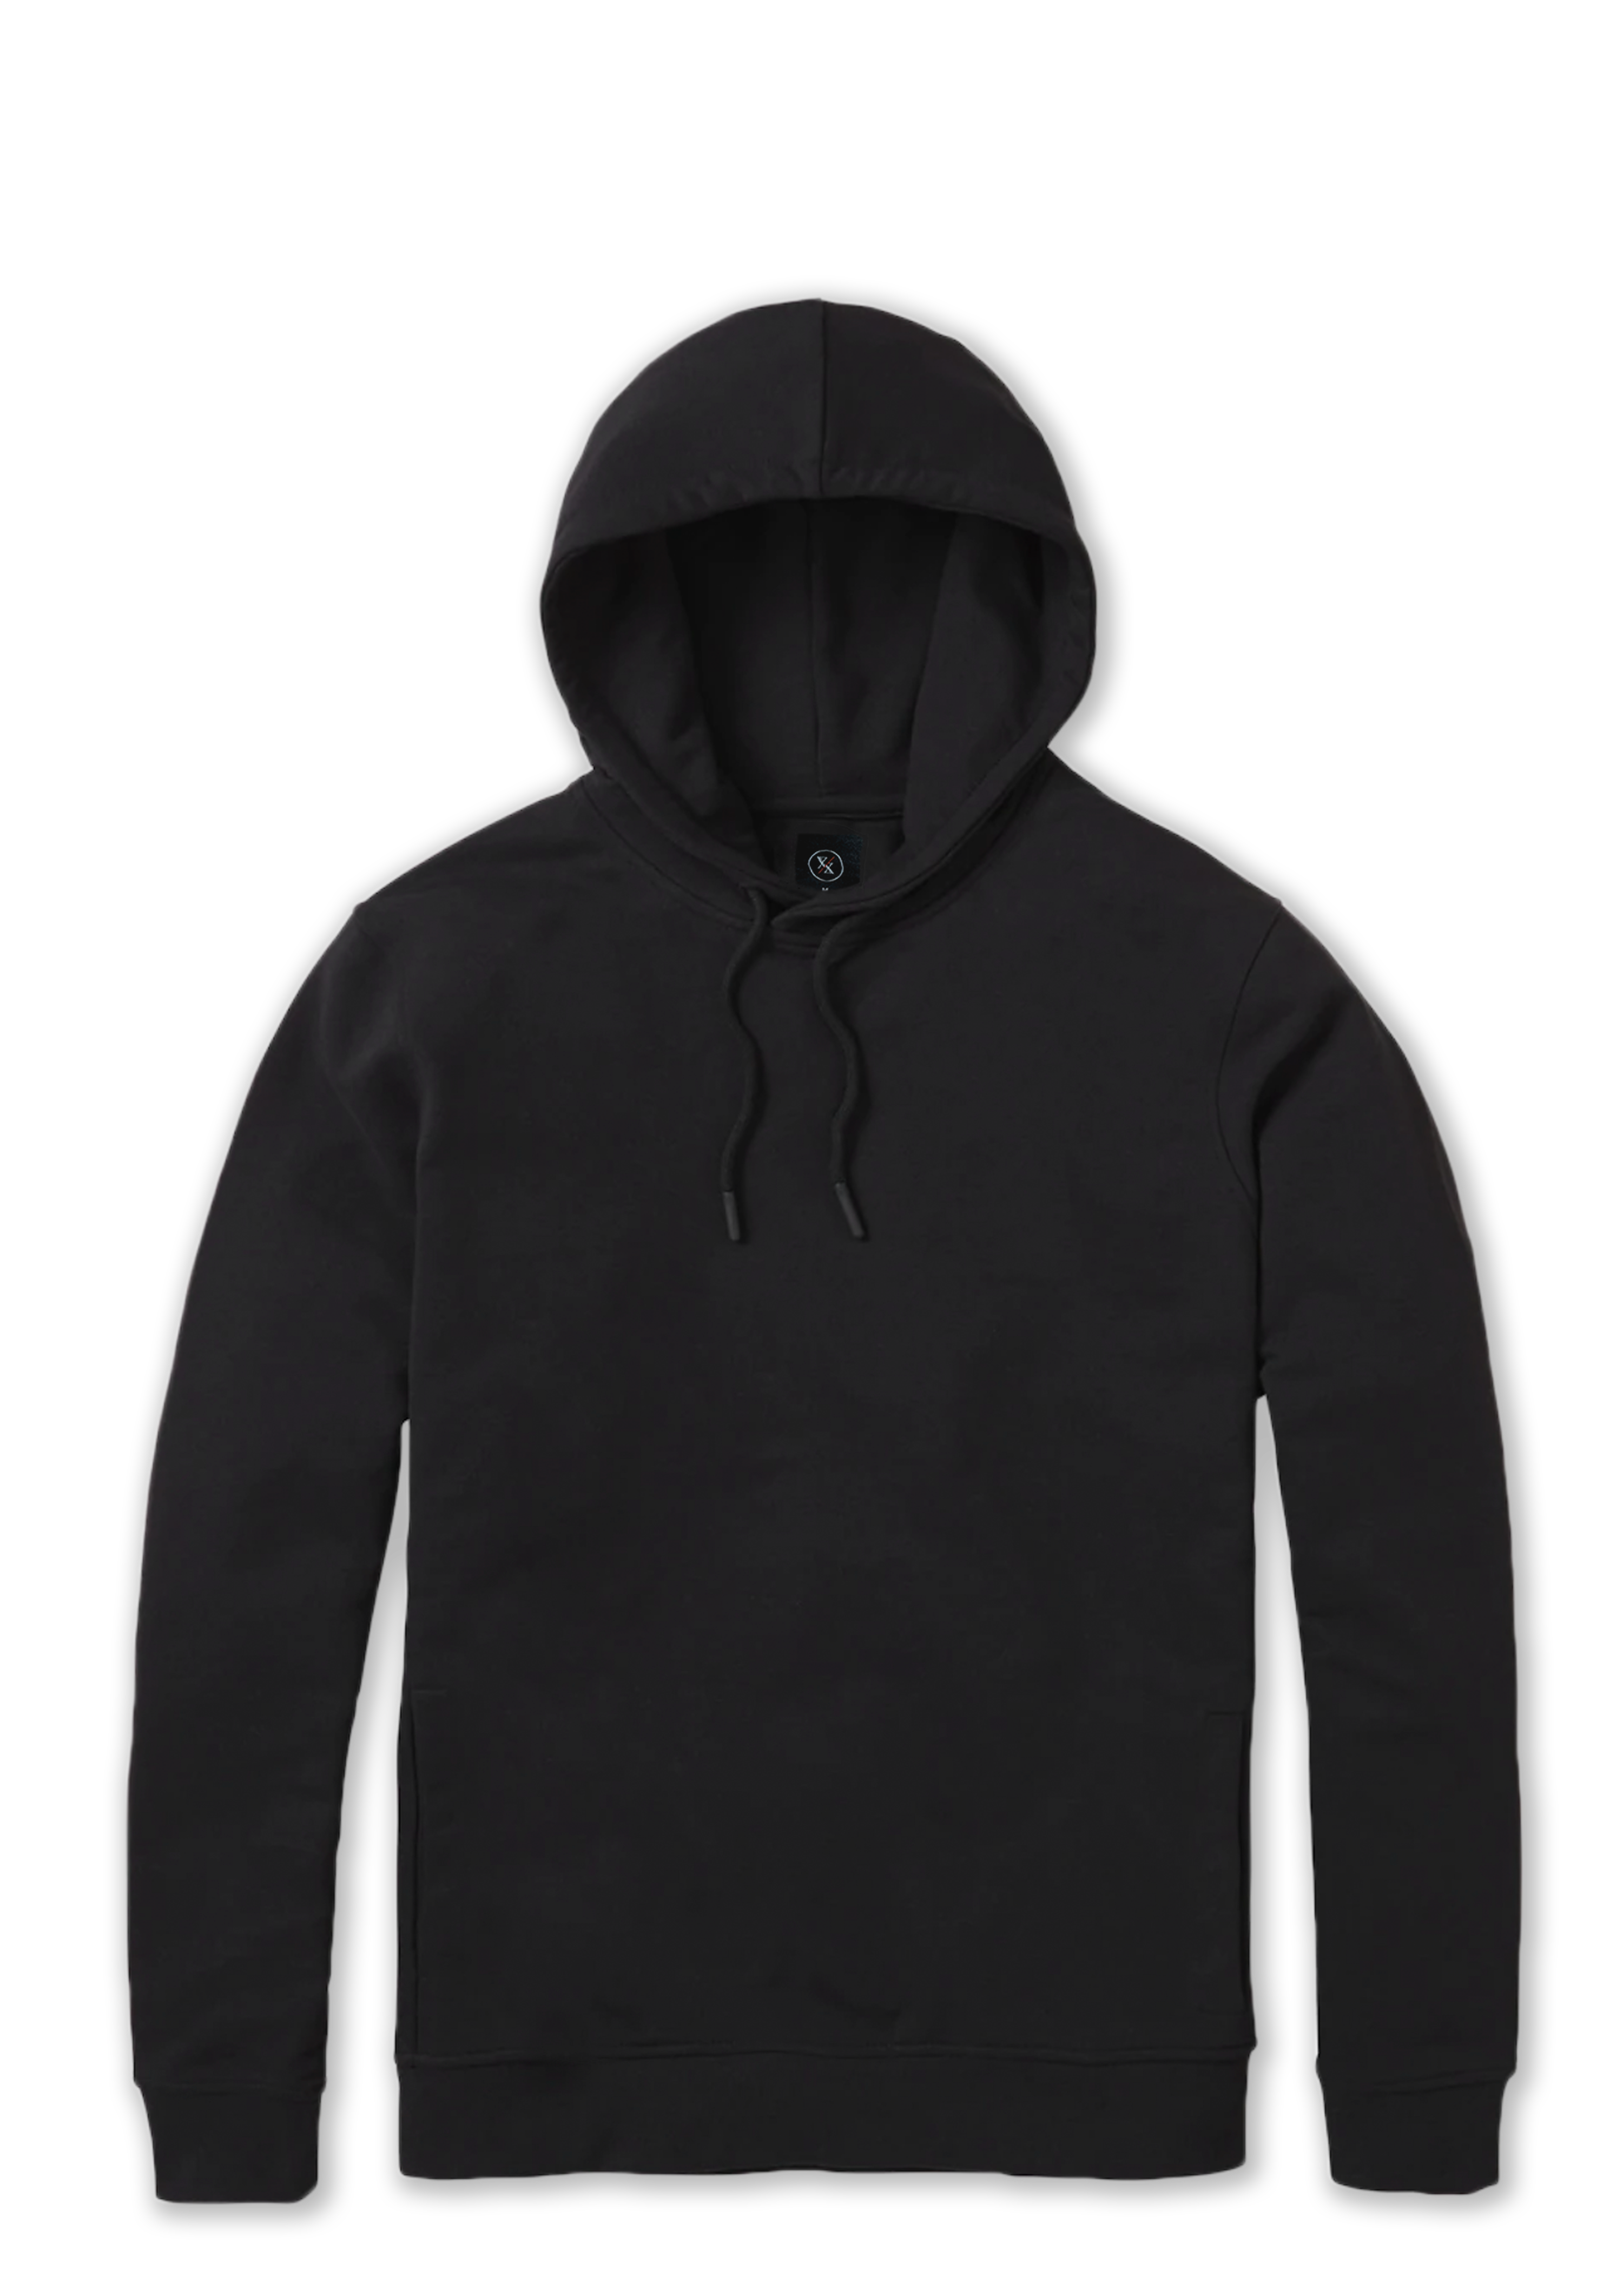 Buy Tenebrose Men's Cotton Hooded Regular Hoodie  (Mpn-Hud-Blk-Men_#145_Black_S) at